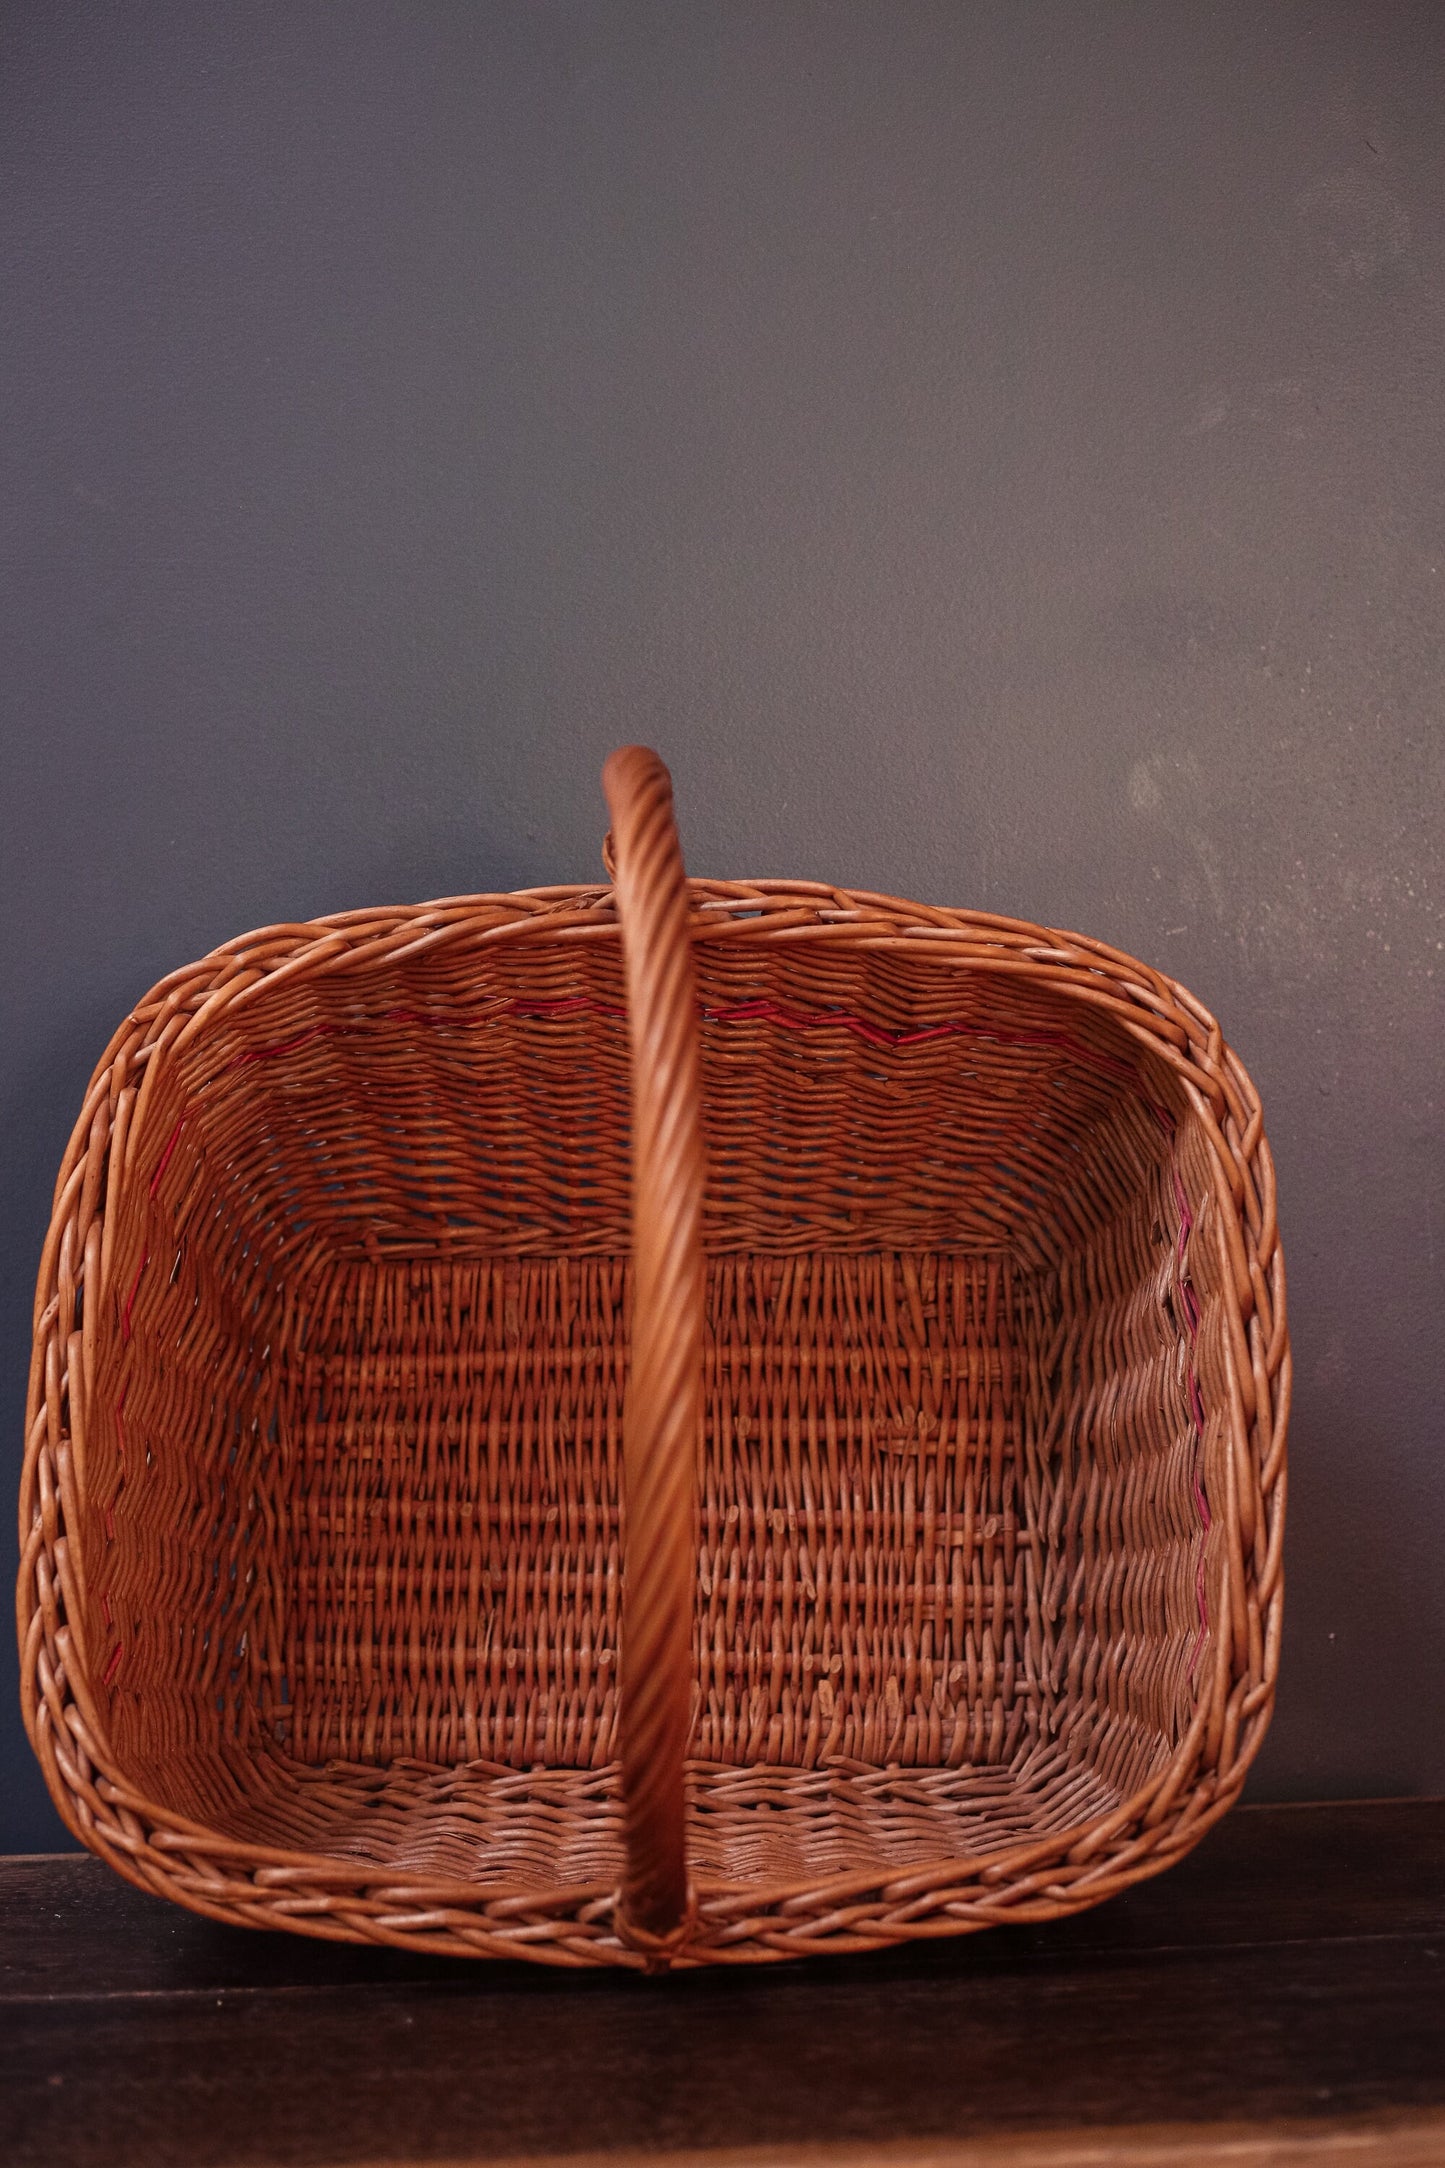 Red Stripe Wicker Rattan Rectangular Flat Bottom Gathering Basket - Large Vintage Rattan Harvest Basket with Handle